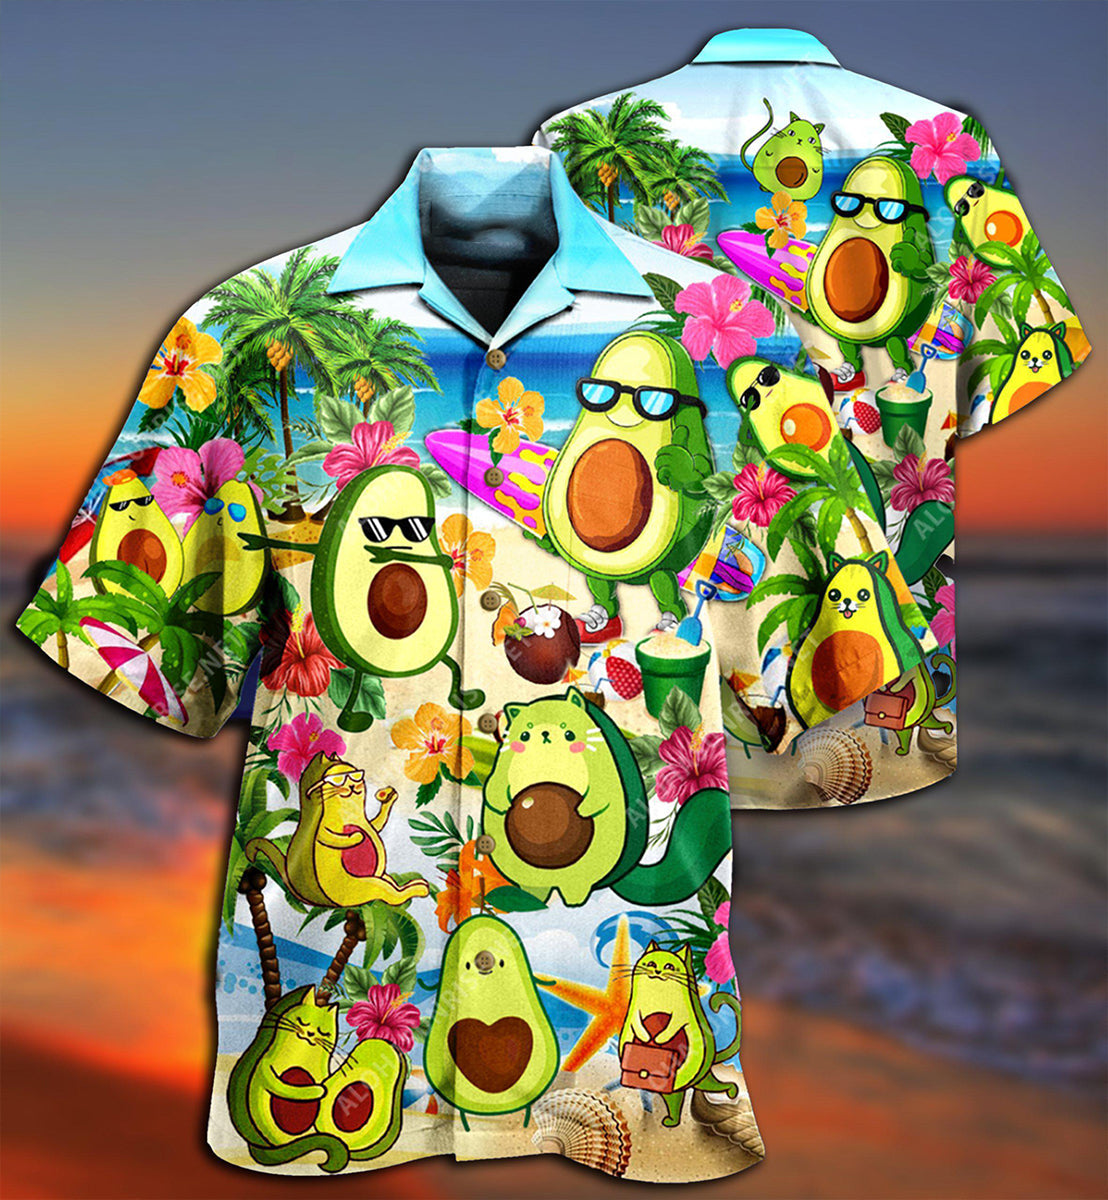 Avocado Chilling By The Beach - Hawaiian Shirt - Owls Matrix LTD